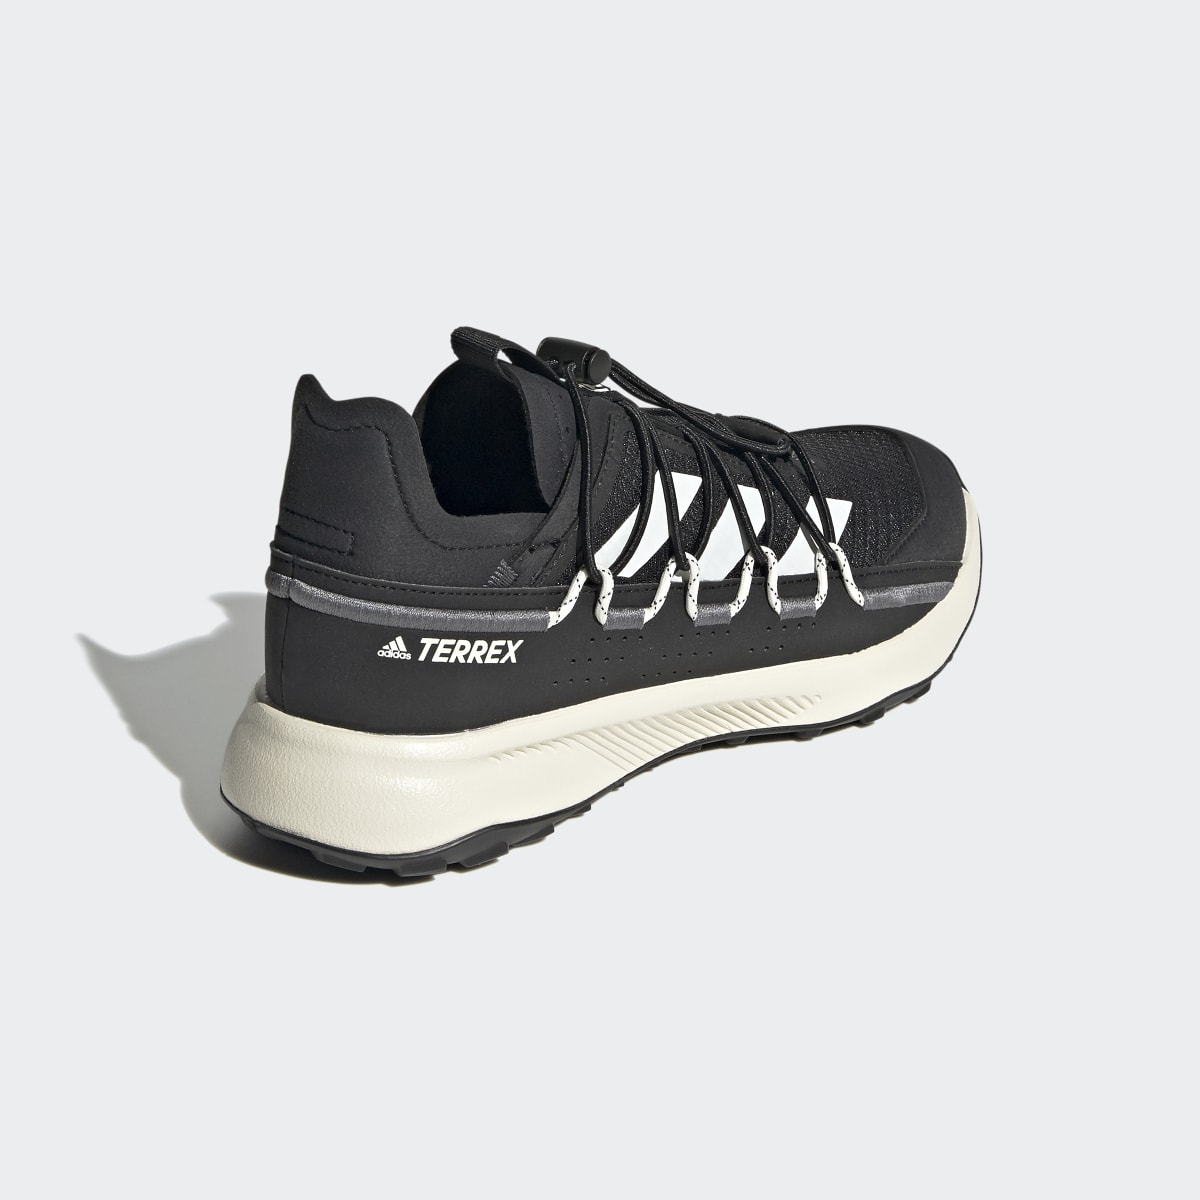 Adidas Scarpe Terrex Voyager 21 Travel. 6